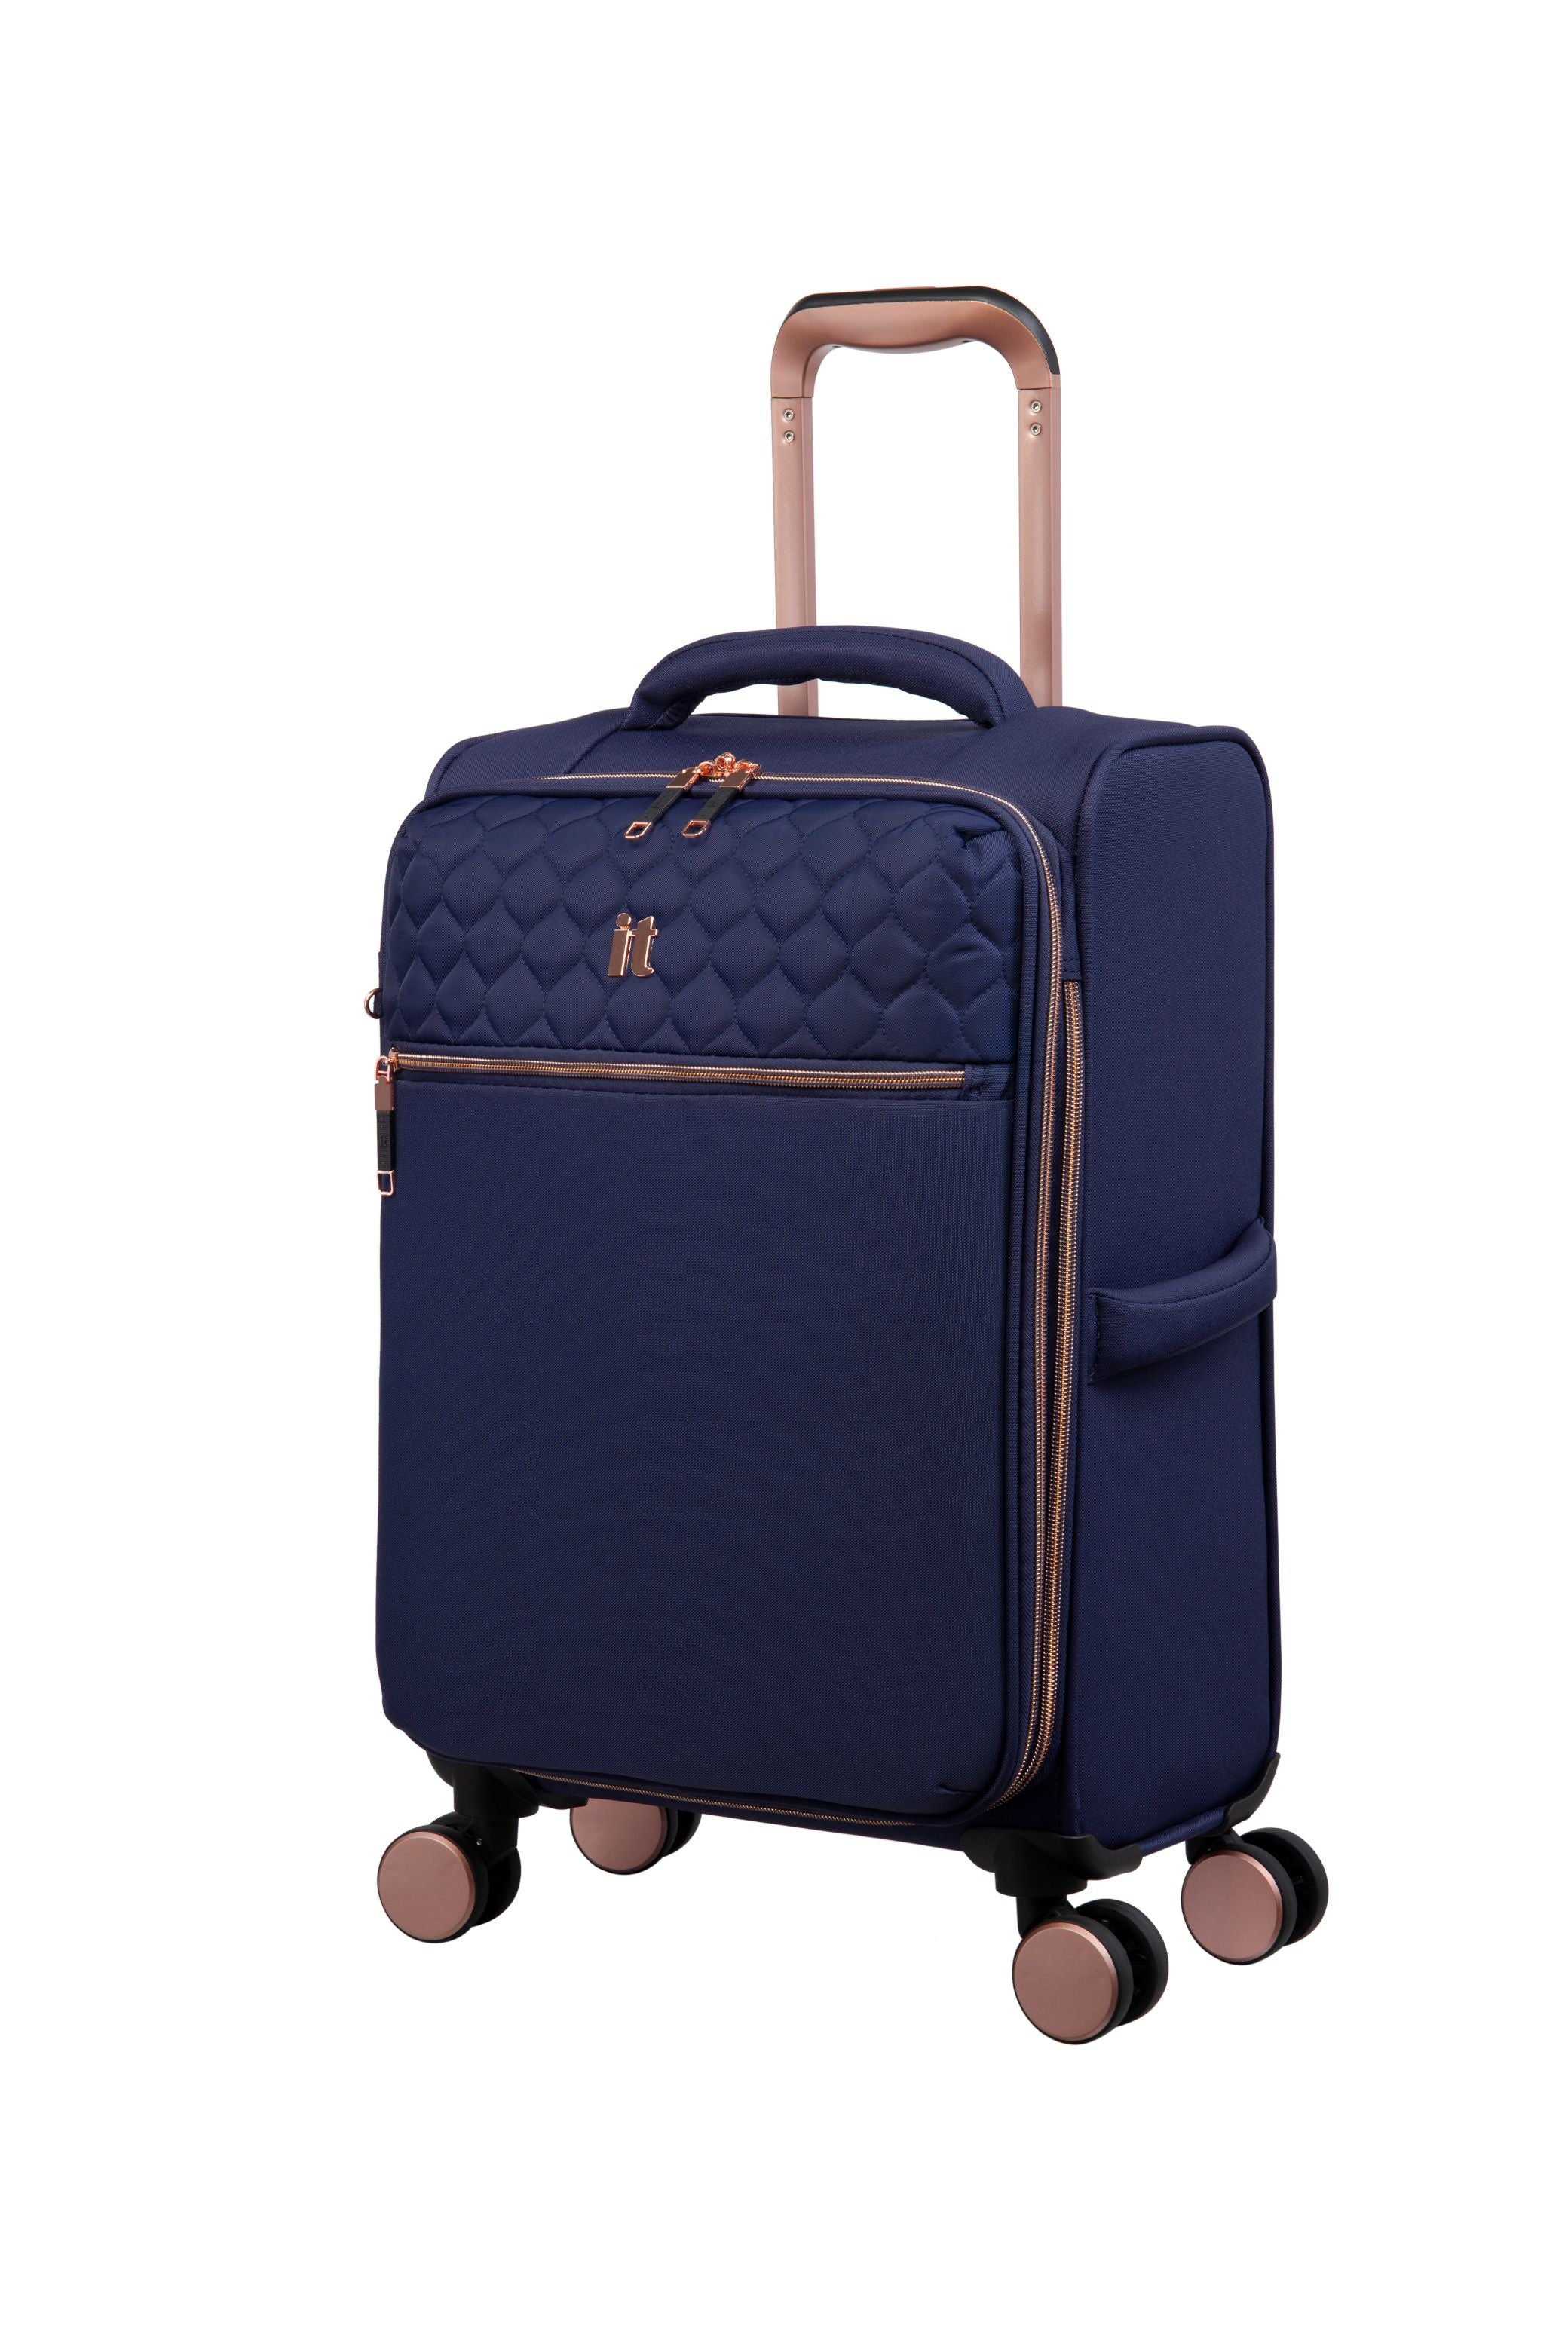 It Luggage Suitcase Lux-lite Divinity Eva - Royal Blue - Medium  | TJ Hughes